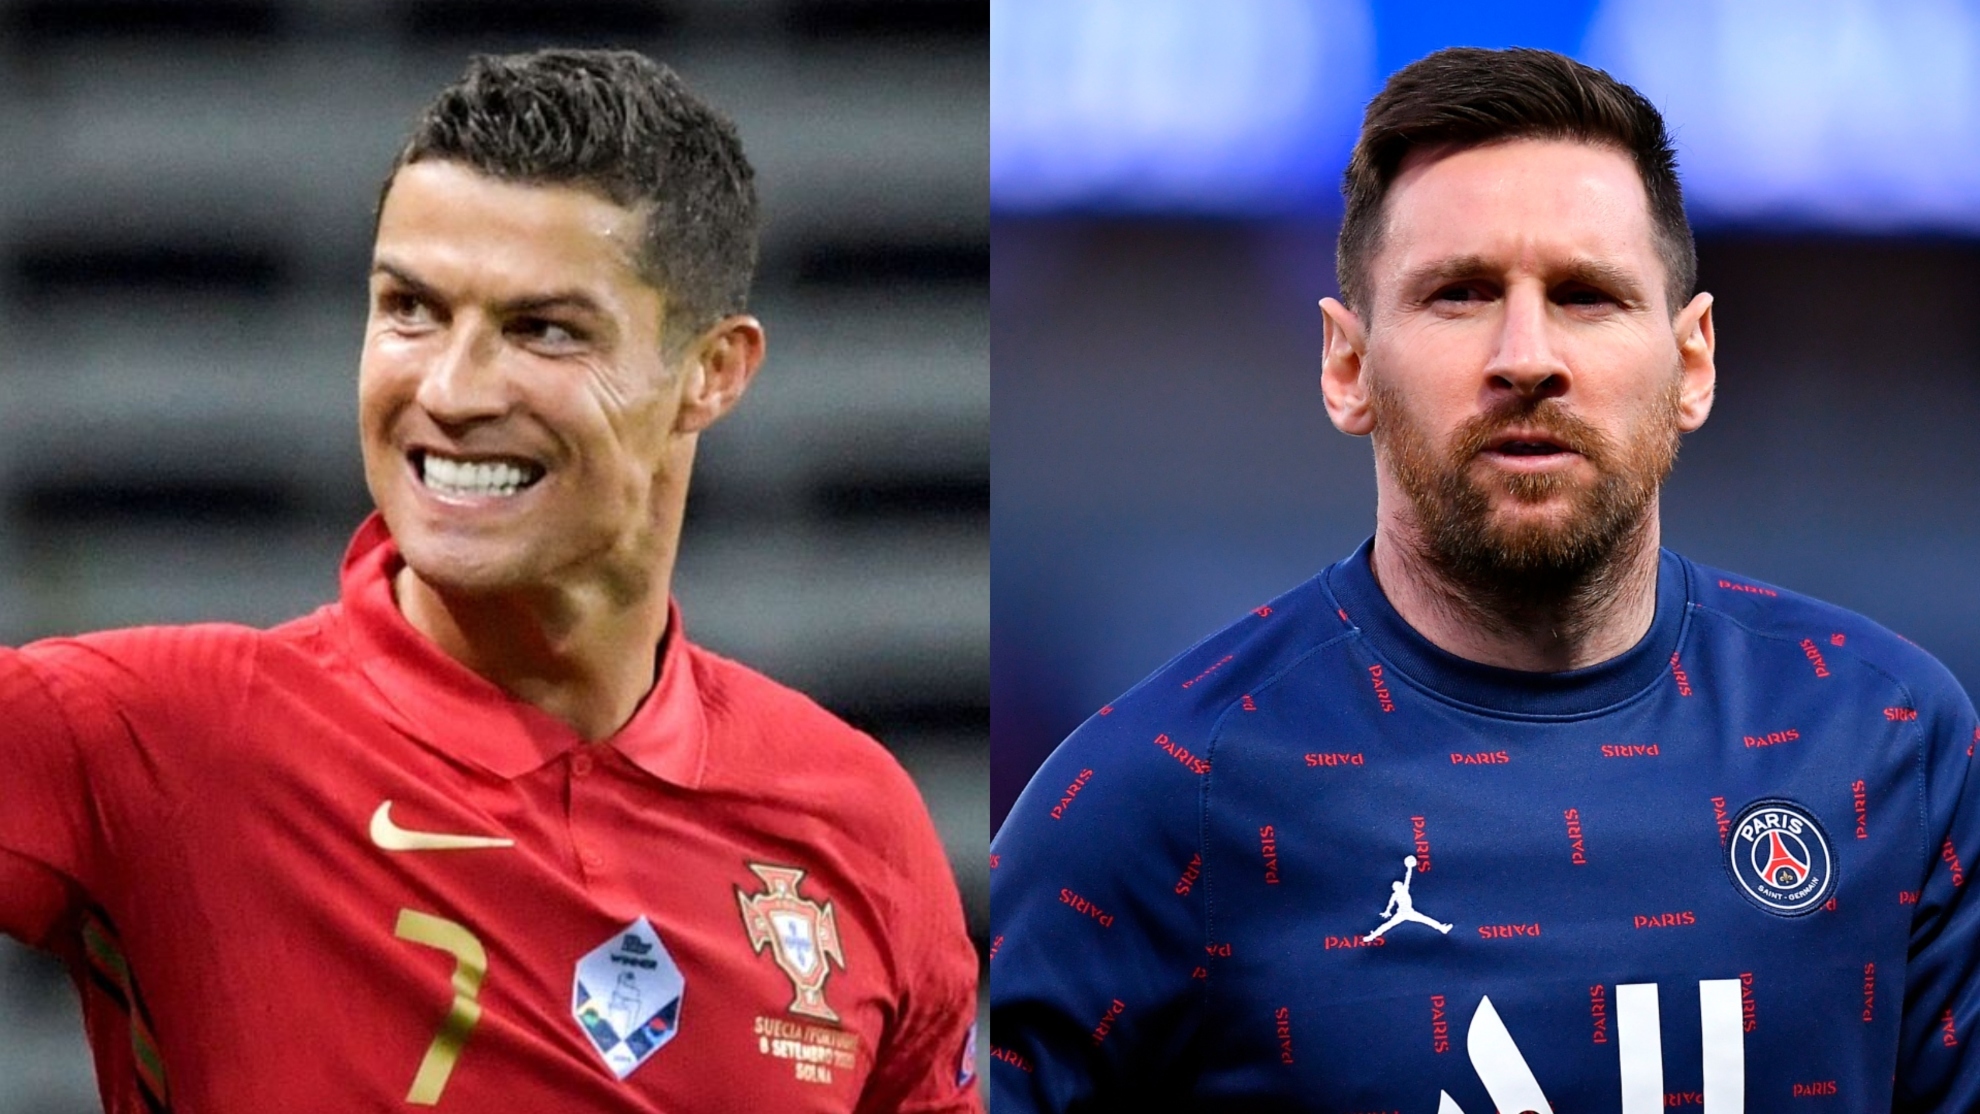 Lionel Messi and Cristiano Ronaldo could come to the MLS: Landon Donovan - Marca